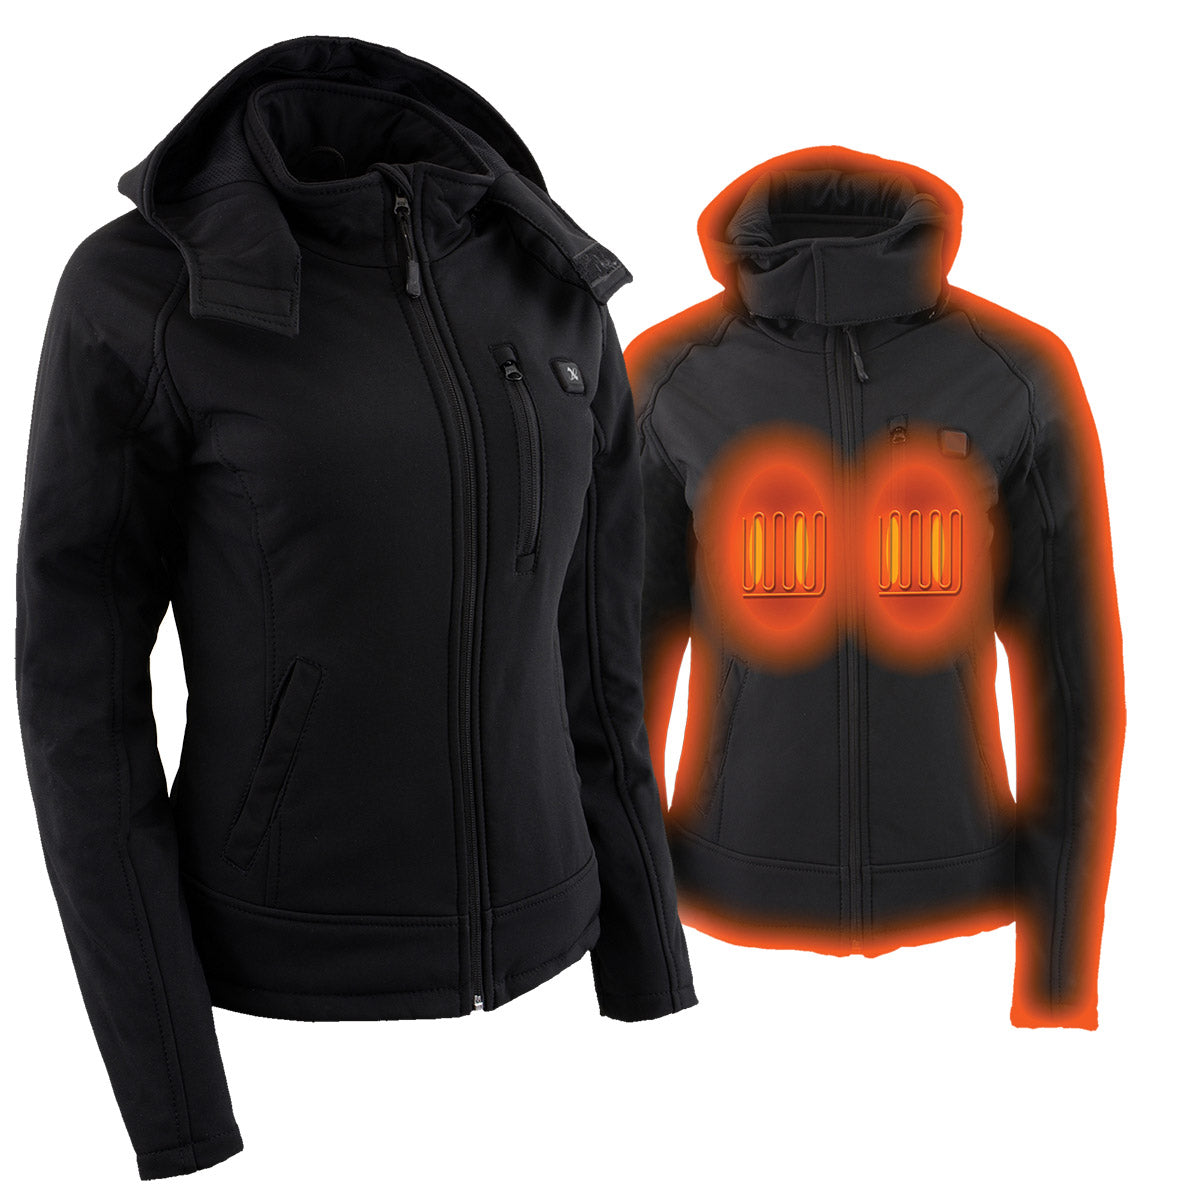 Nexgen Heat NXL2767SET Women's Black Ruffled Heated Soft Shell Jacket with Detachable Hood for Hiking w/ Battery